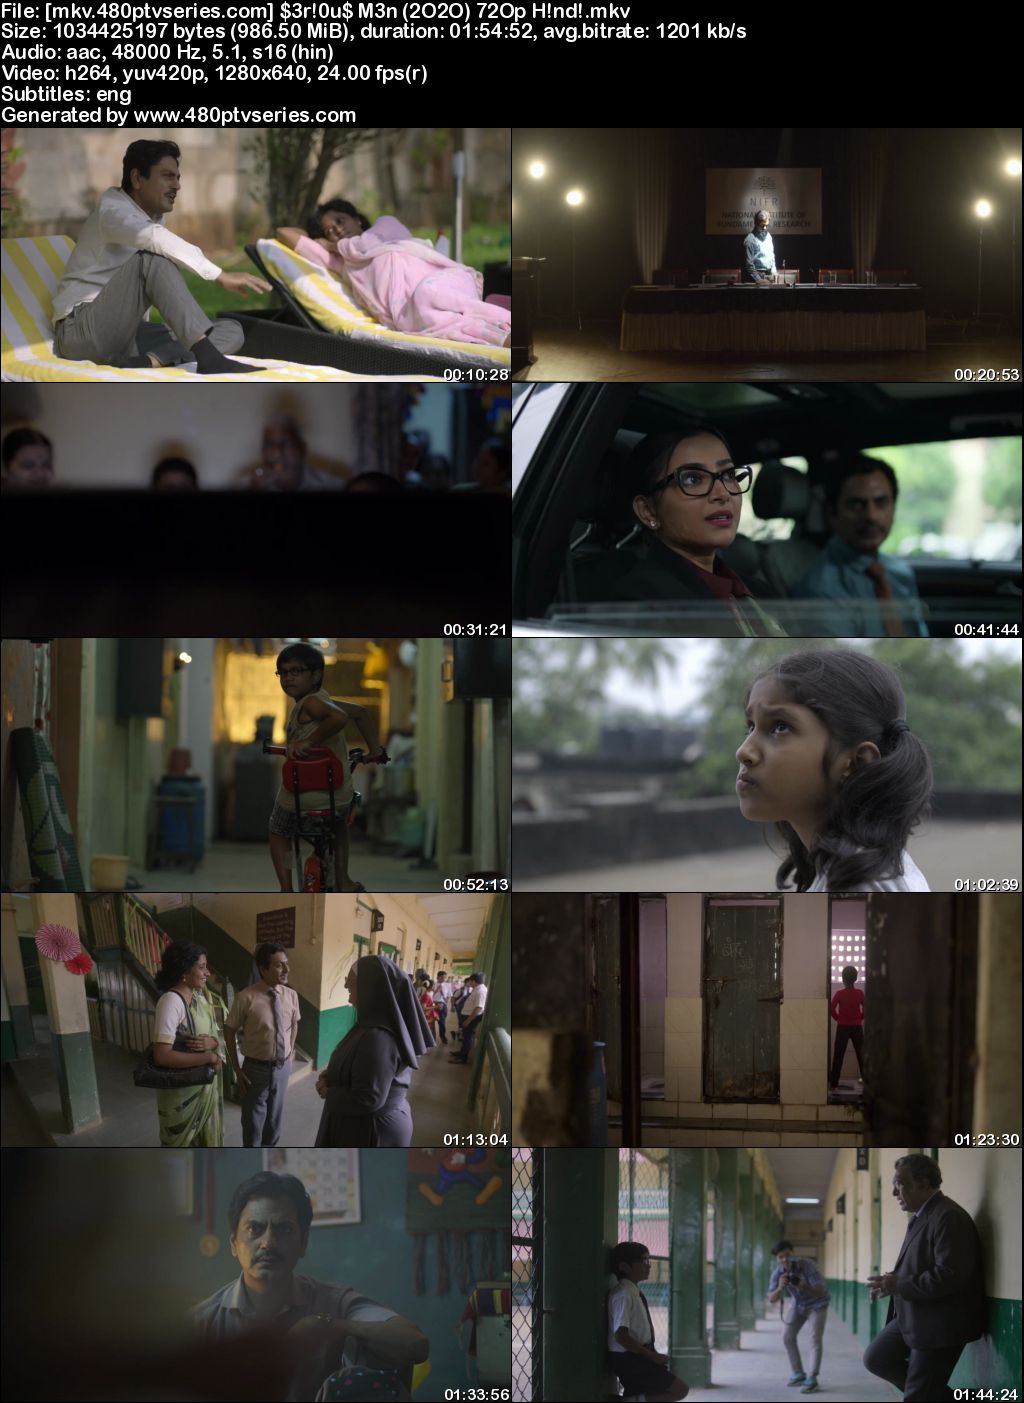 Watch Online Free Serious Men (2020) Full Hindi Movie Download 480p 720p Web-DL